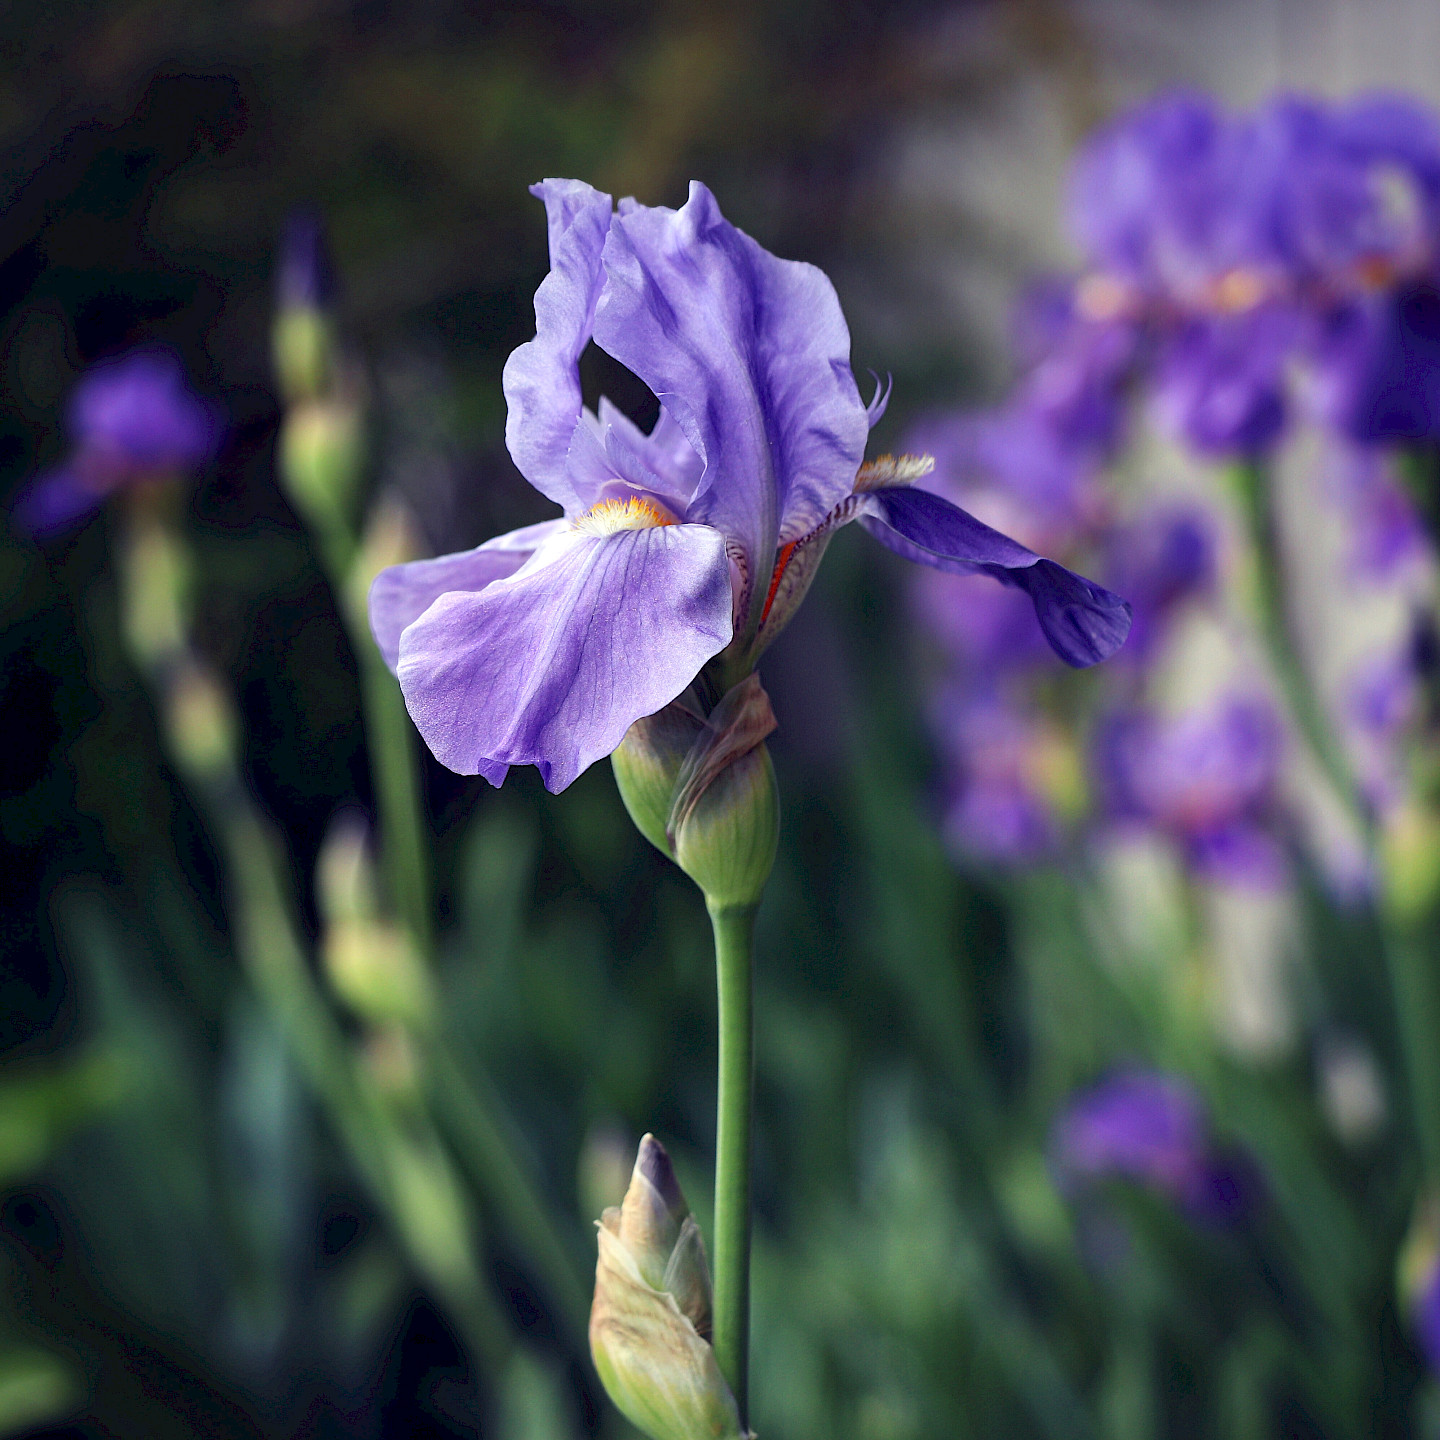 The scent of iris flower